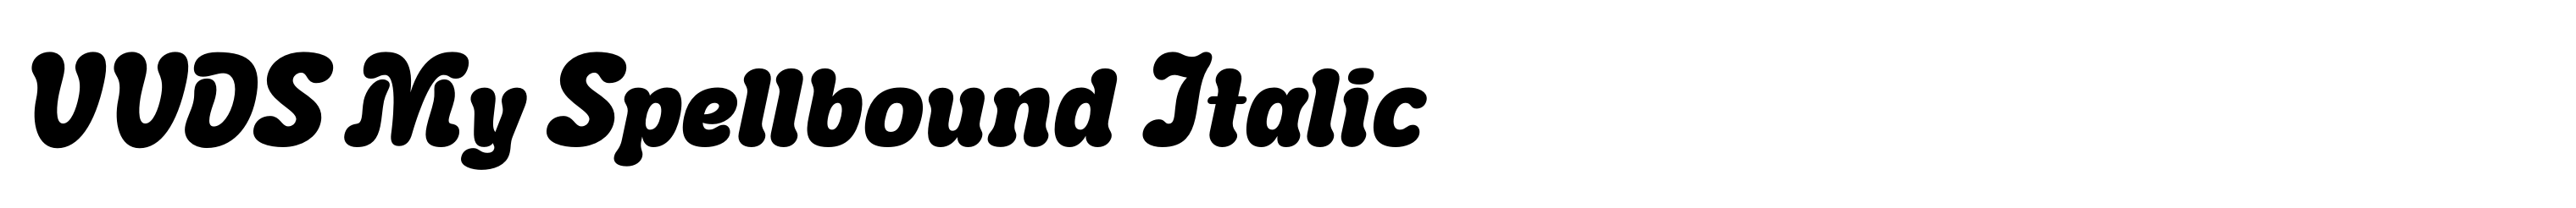 VVDS My Spellbound Italic